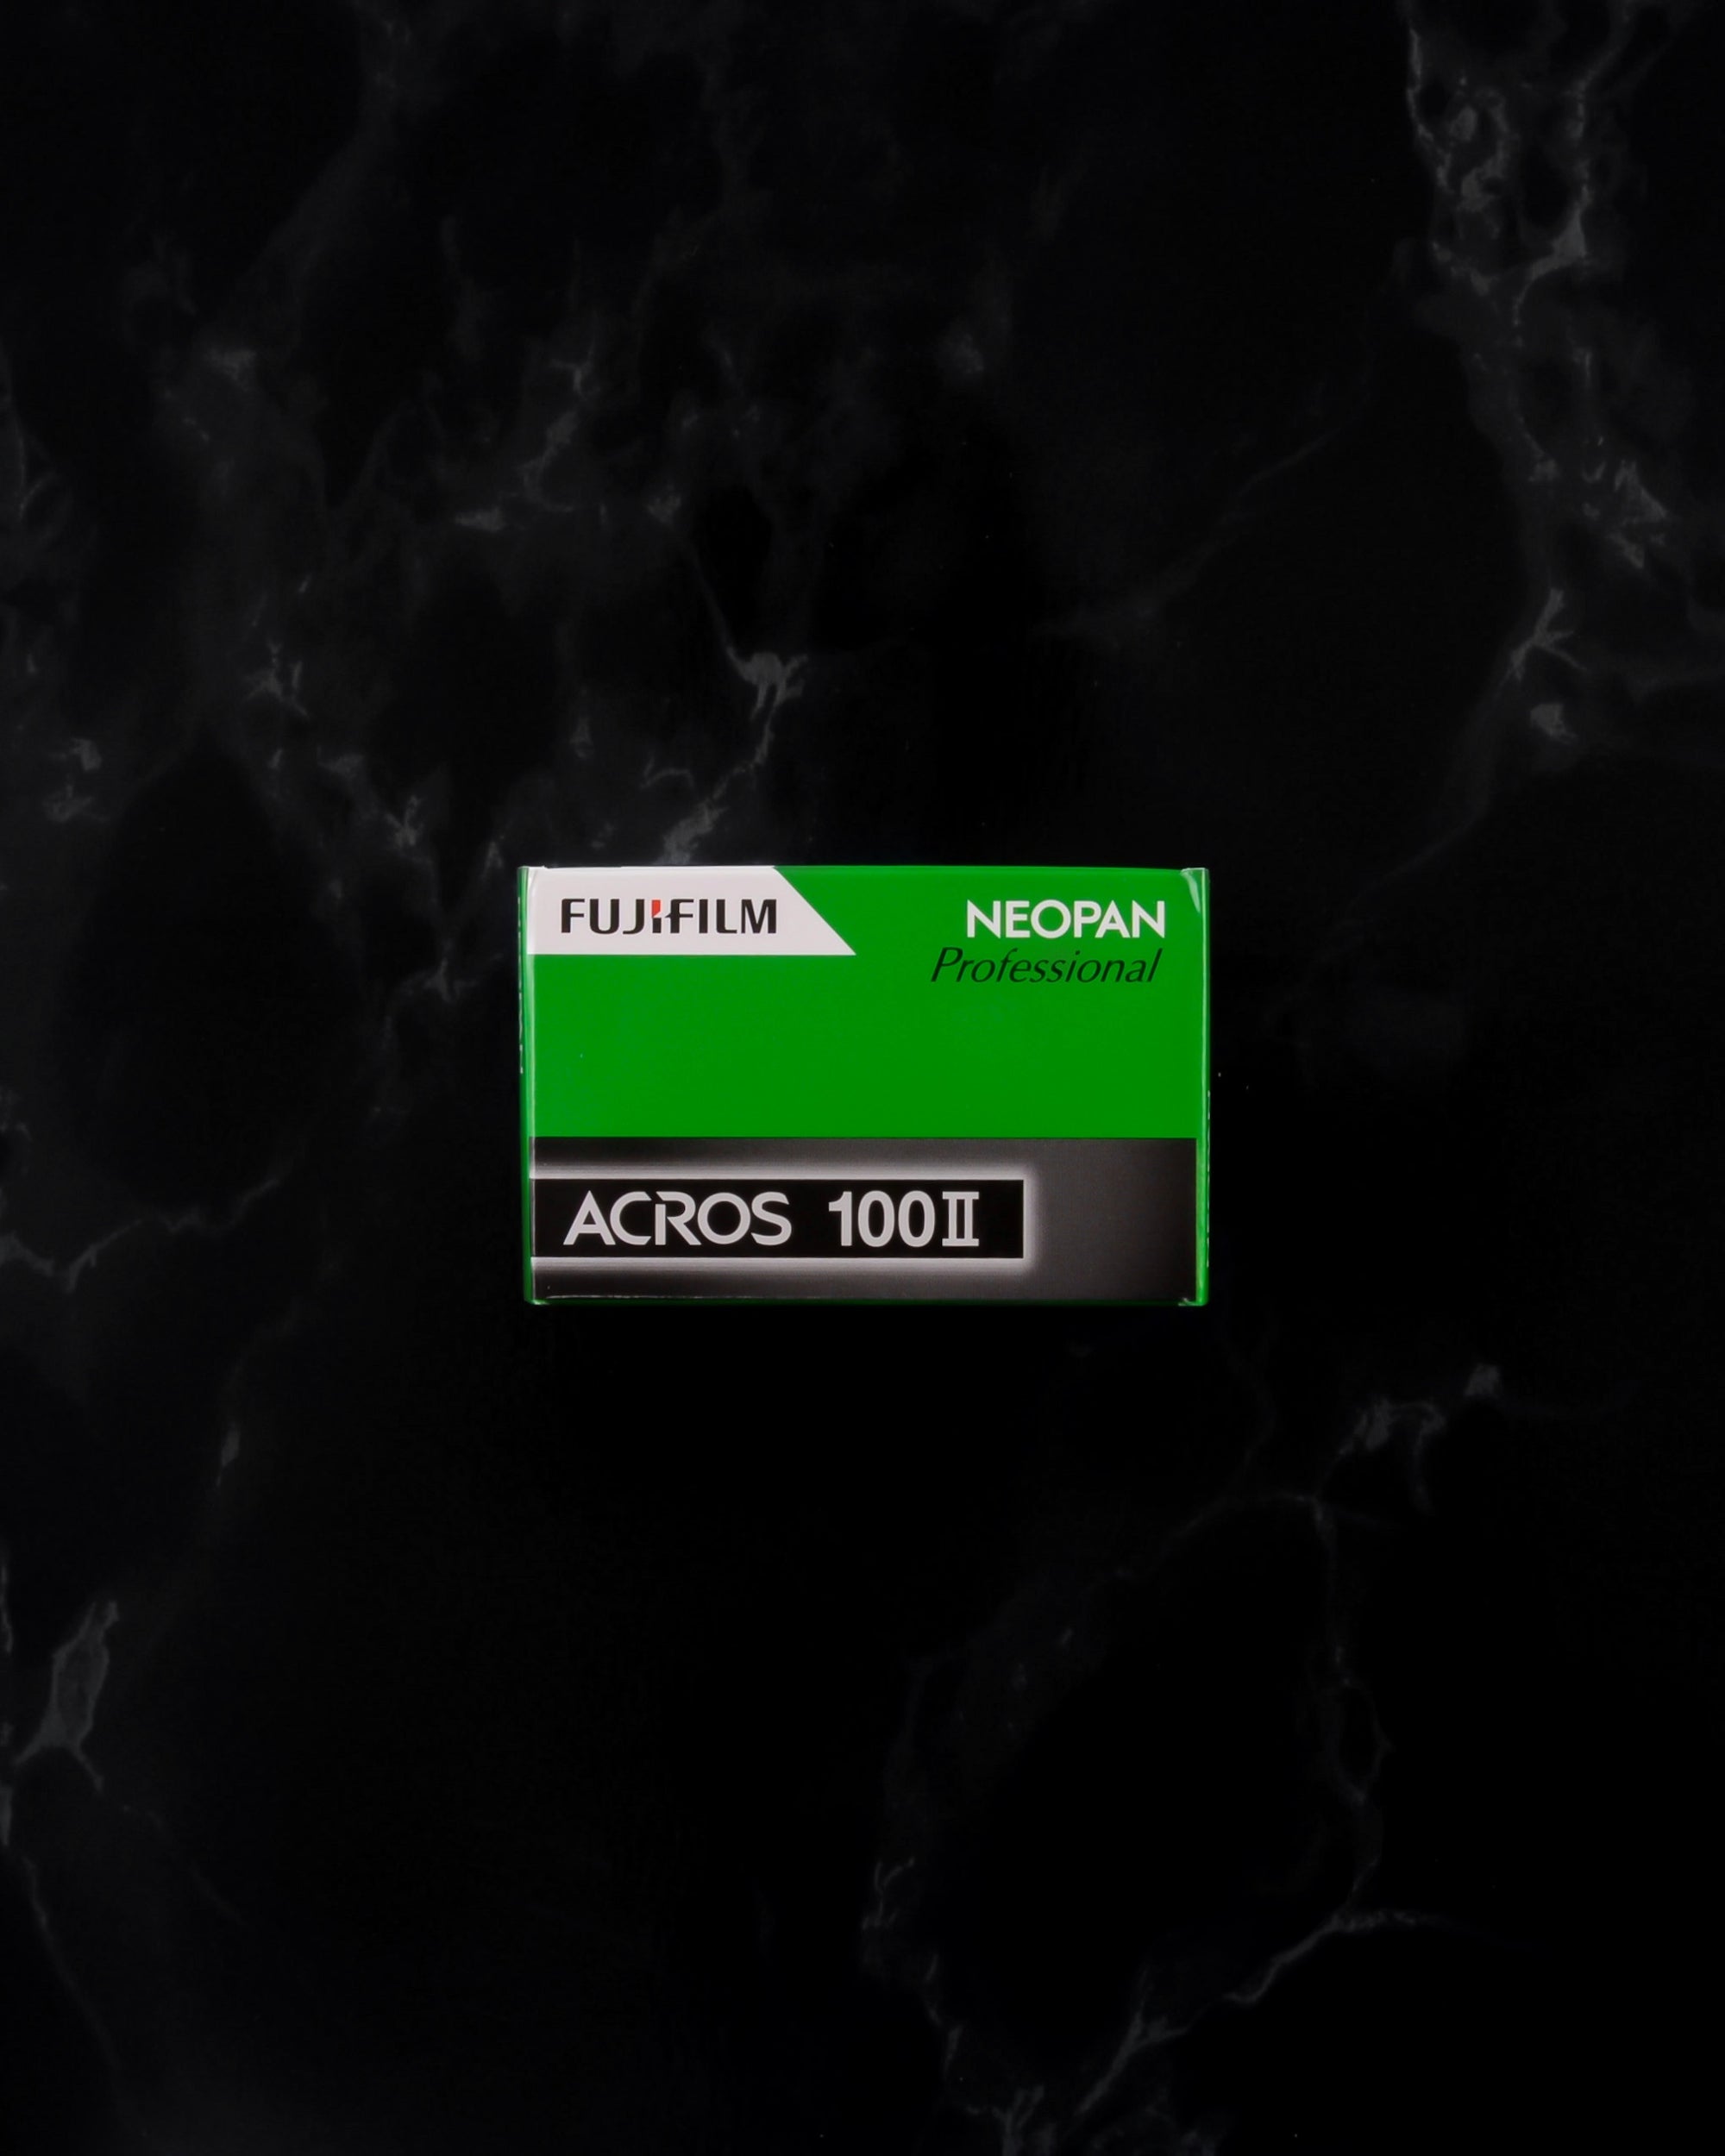 Fujifilm Acros 100II 35mm film